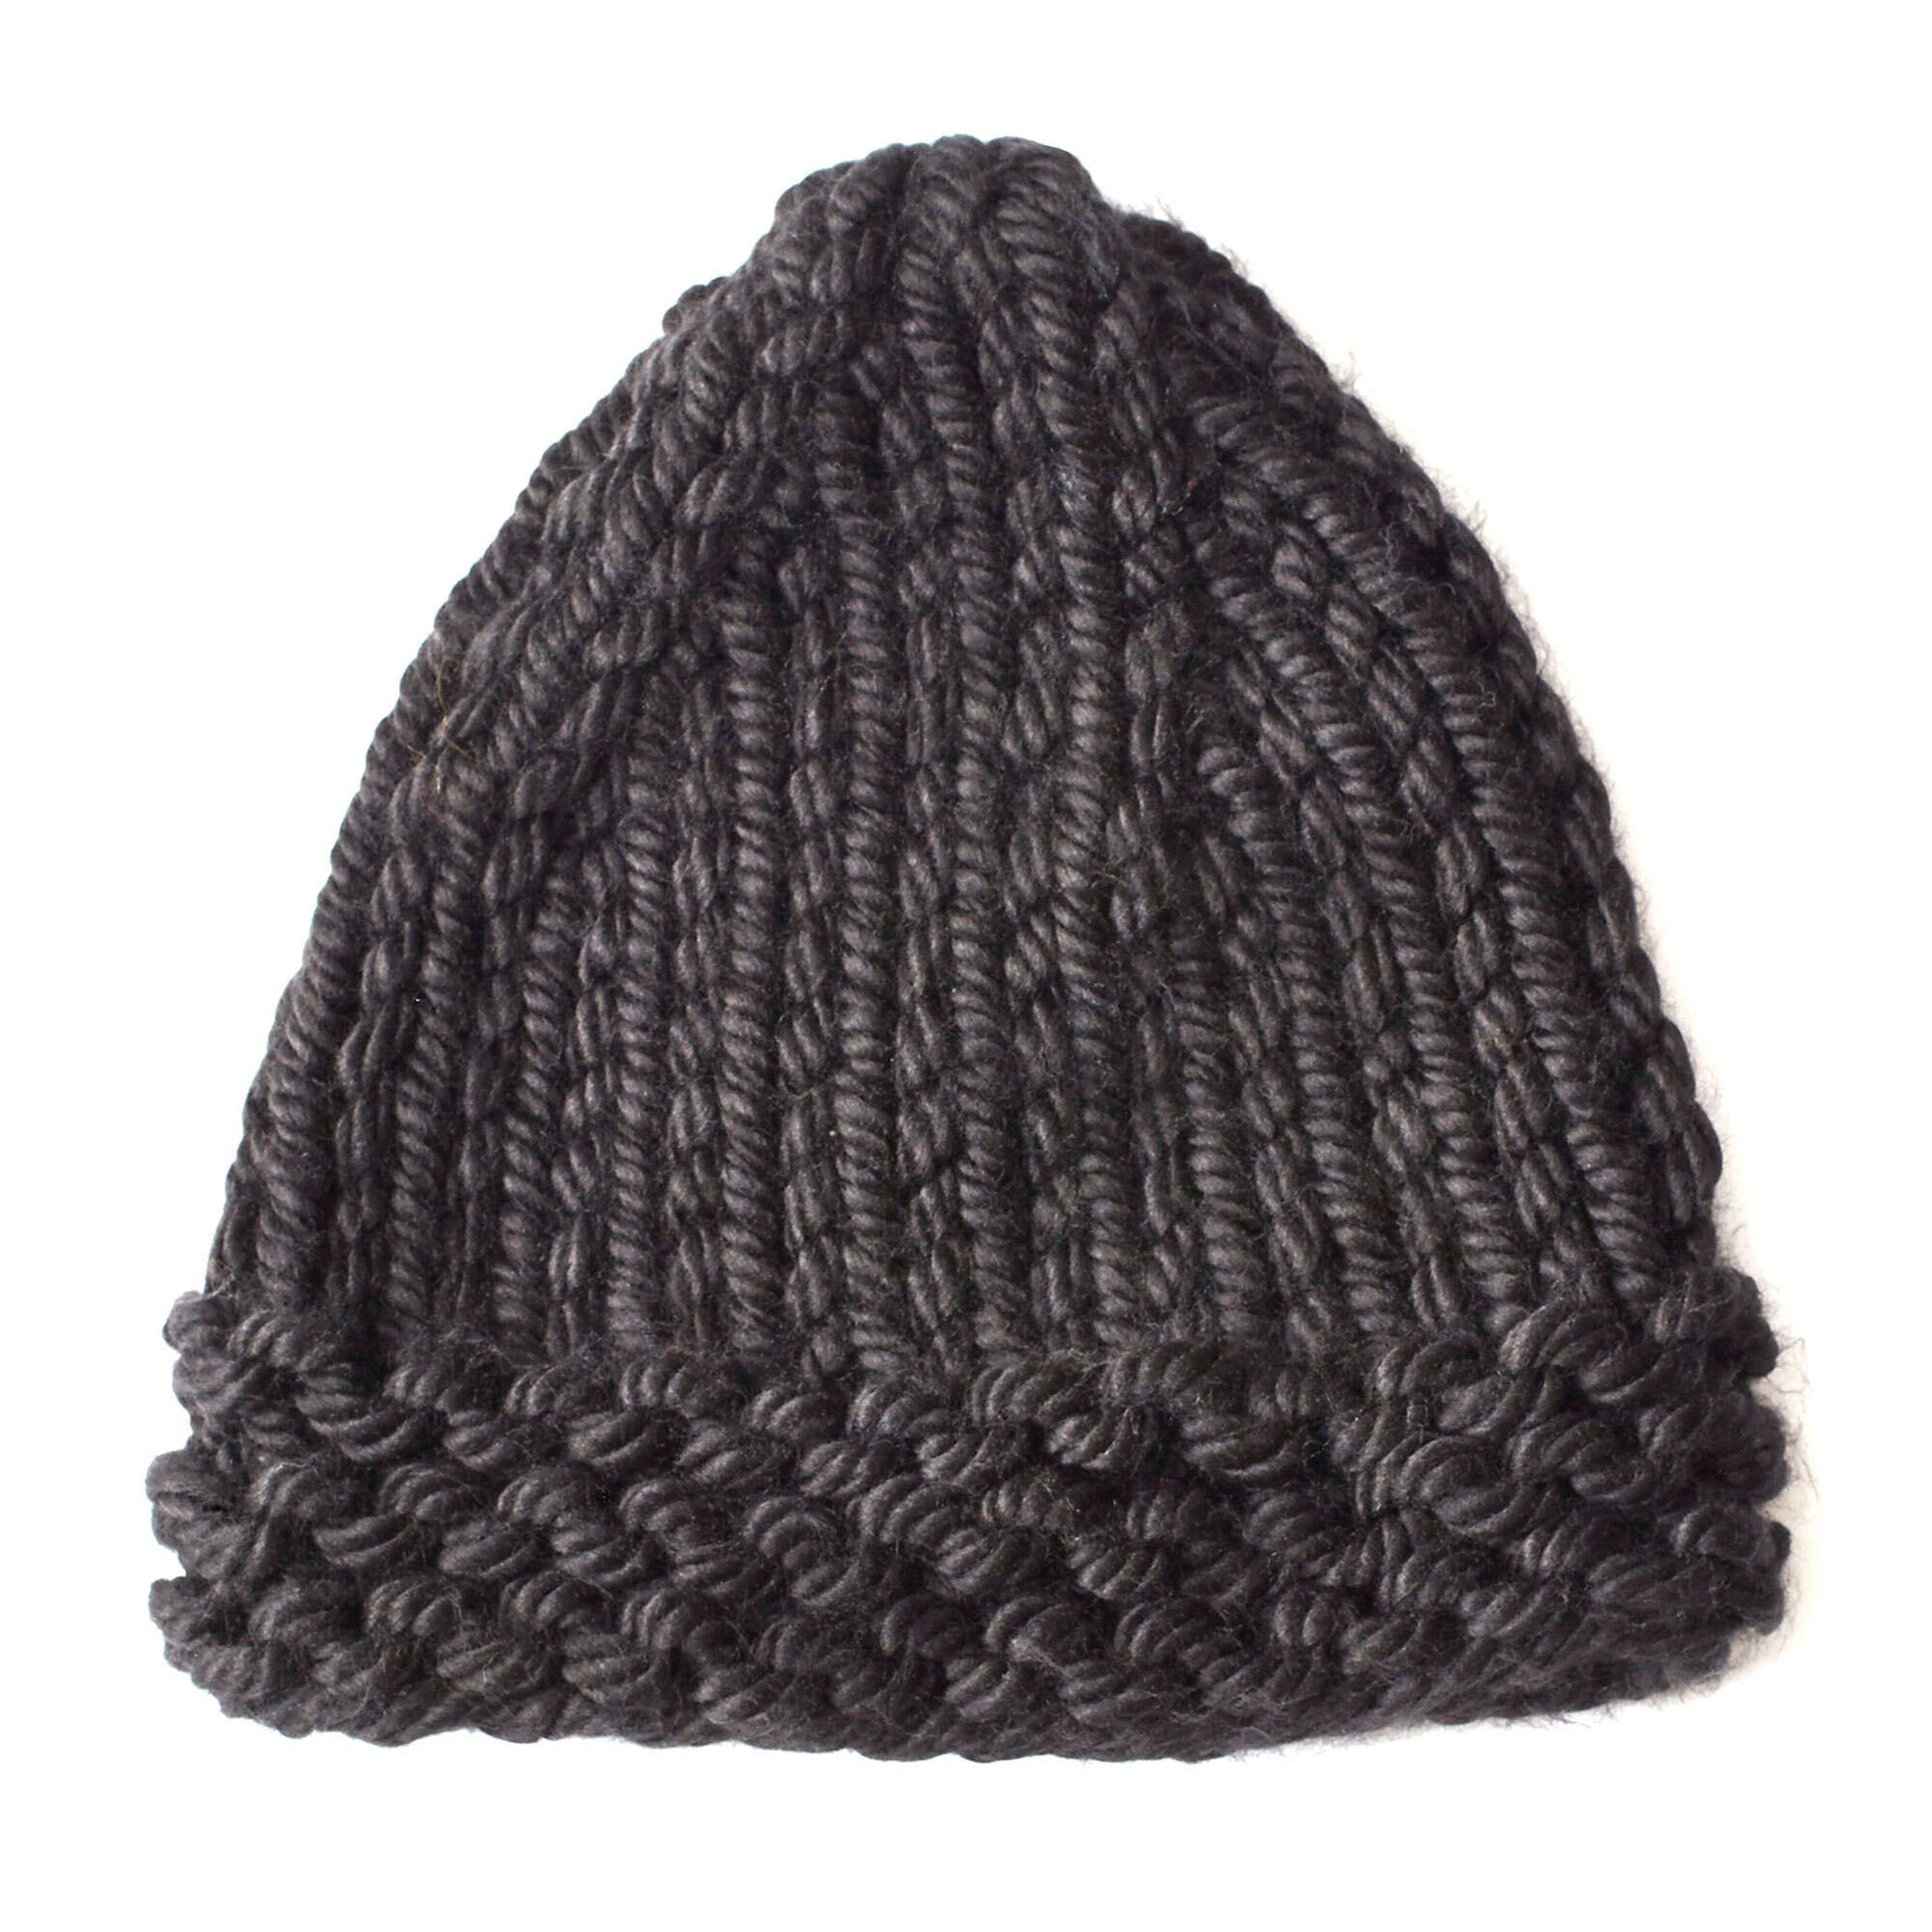 Free Bernat Acorn Hat Knit Pattern